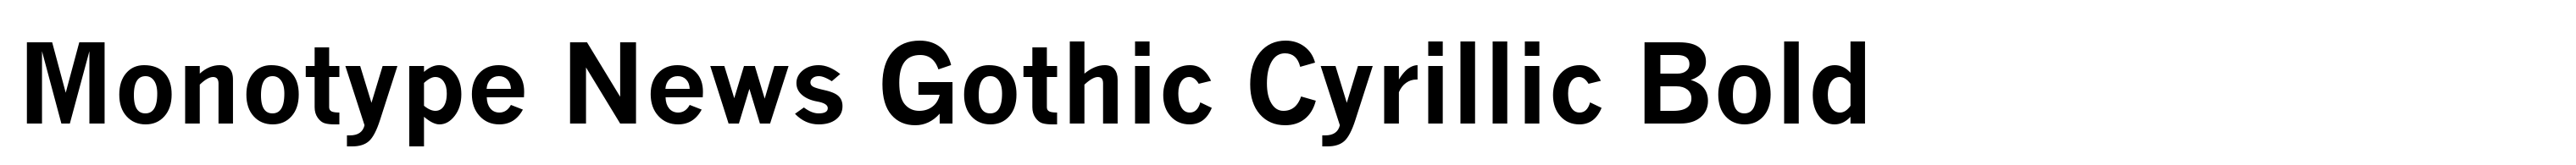 Monotype News Gothic Cyrillic Bold